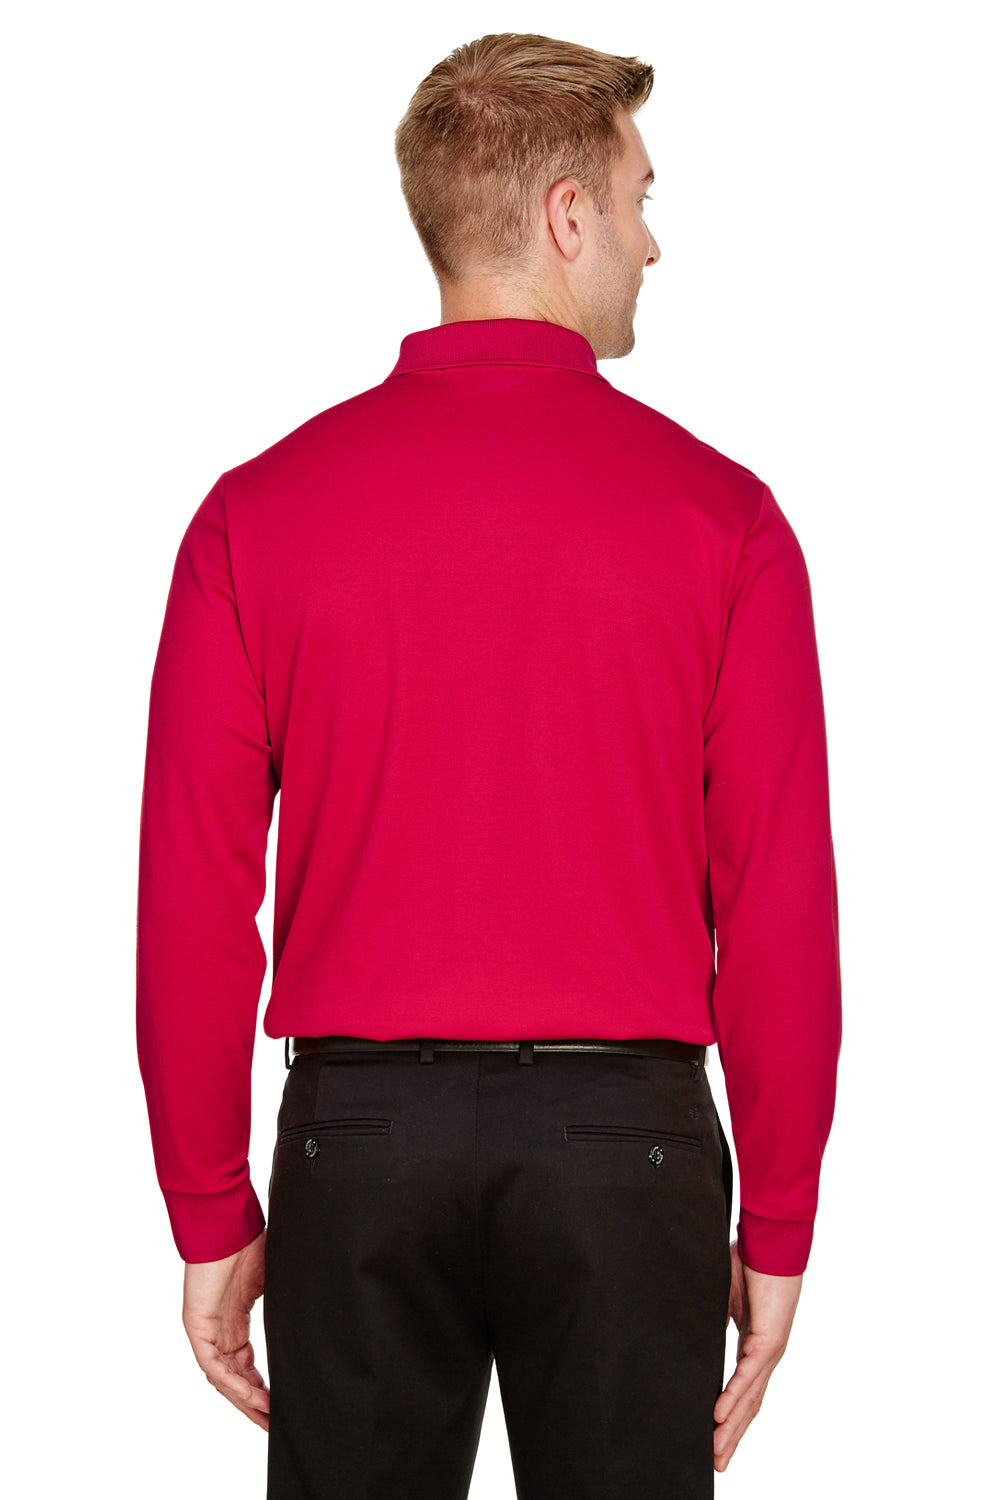 Devon & Jones DG20L Mens CrownLux Performance Moisture Wicking Long Sleeve Polo Shirt Red Back